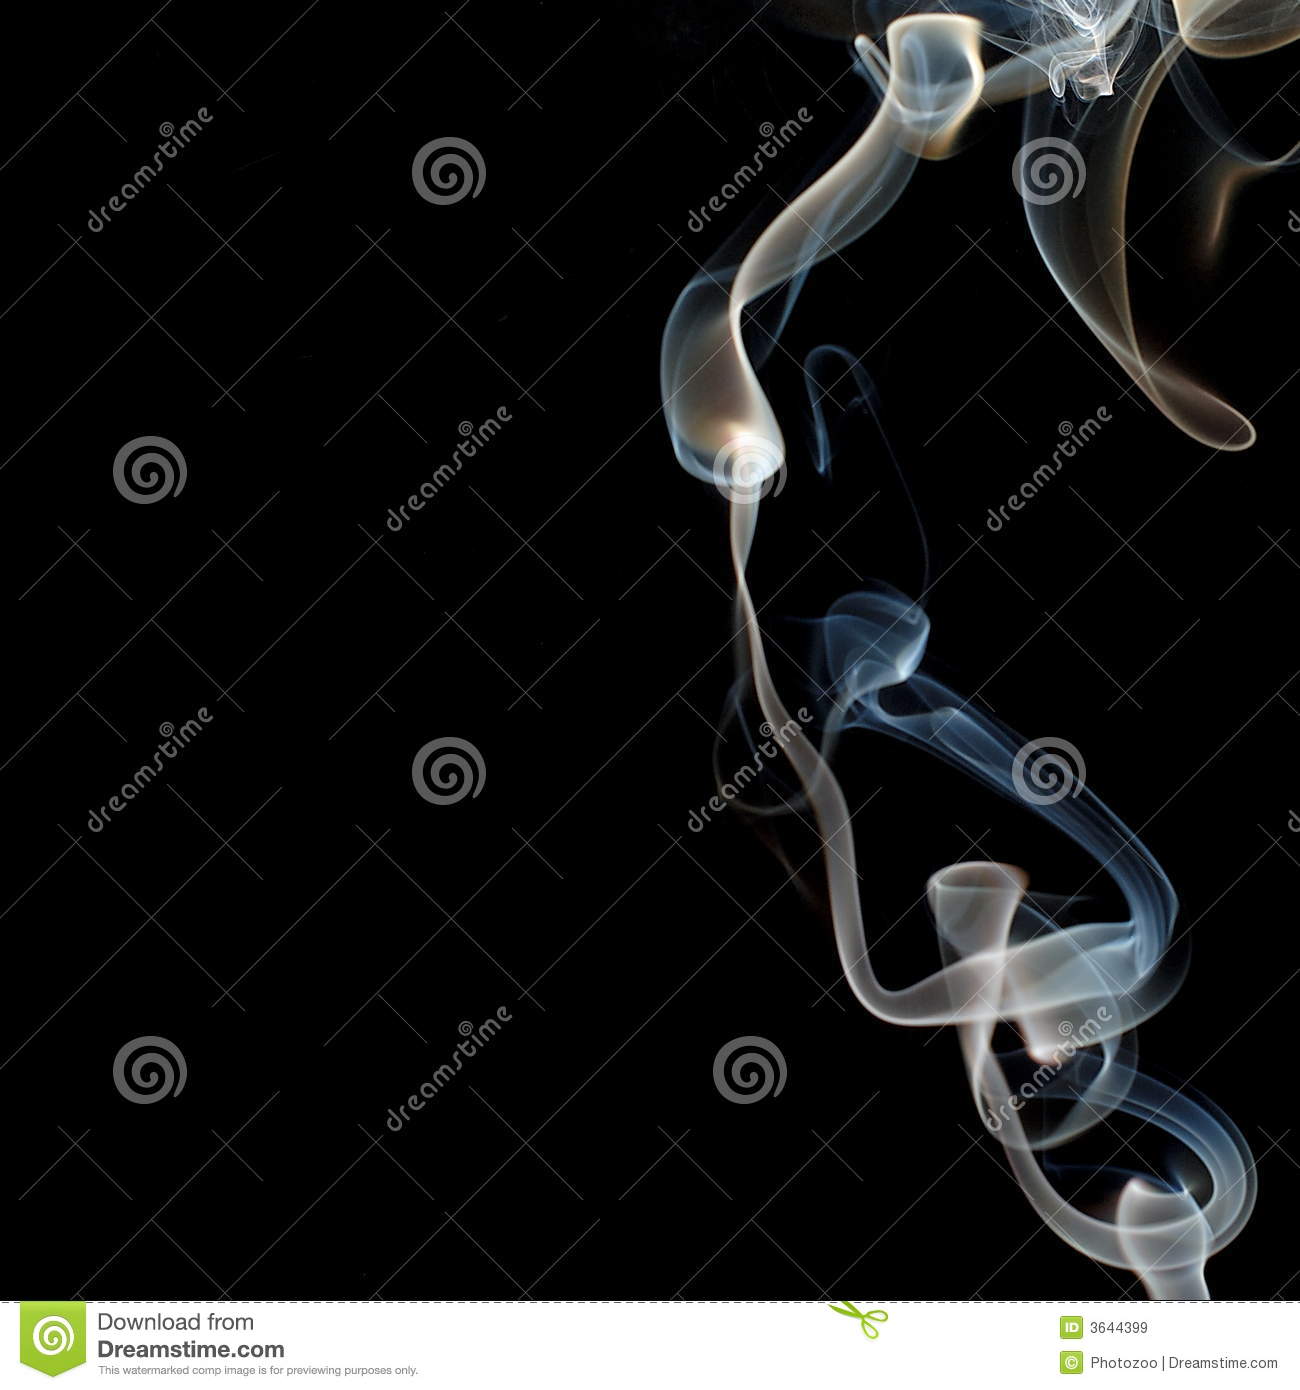 Wisp Of Smoke Royalty Free Stock Images   Image  3644399